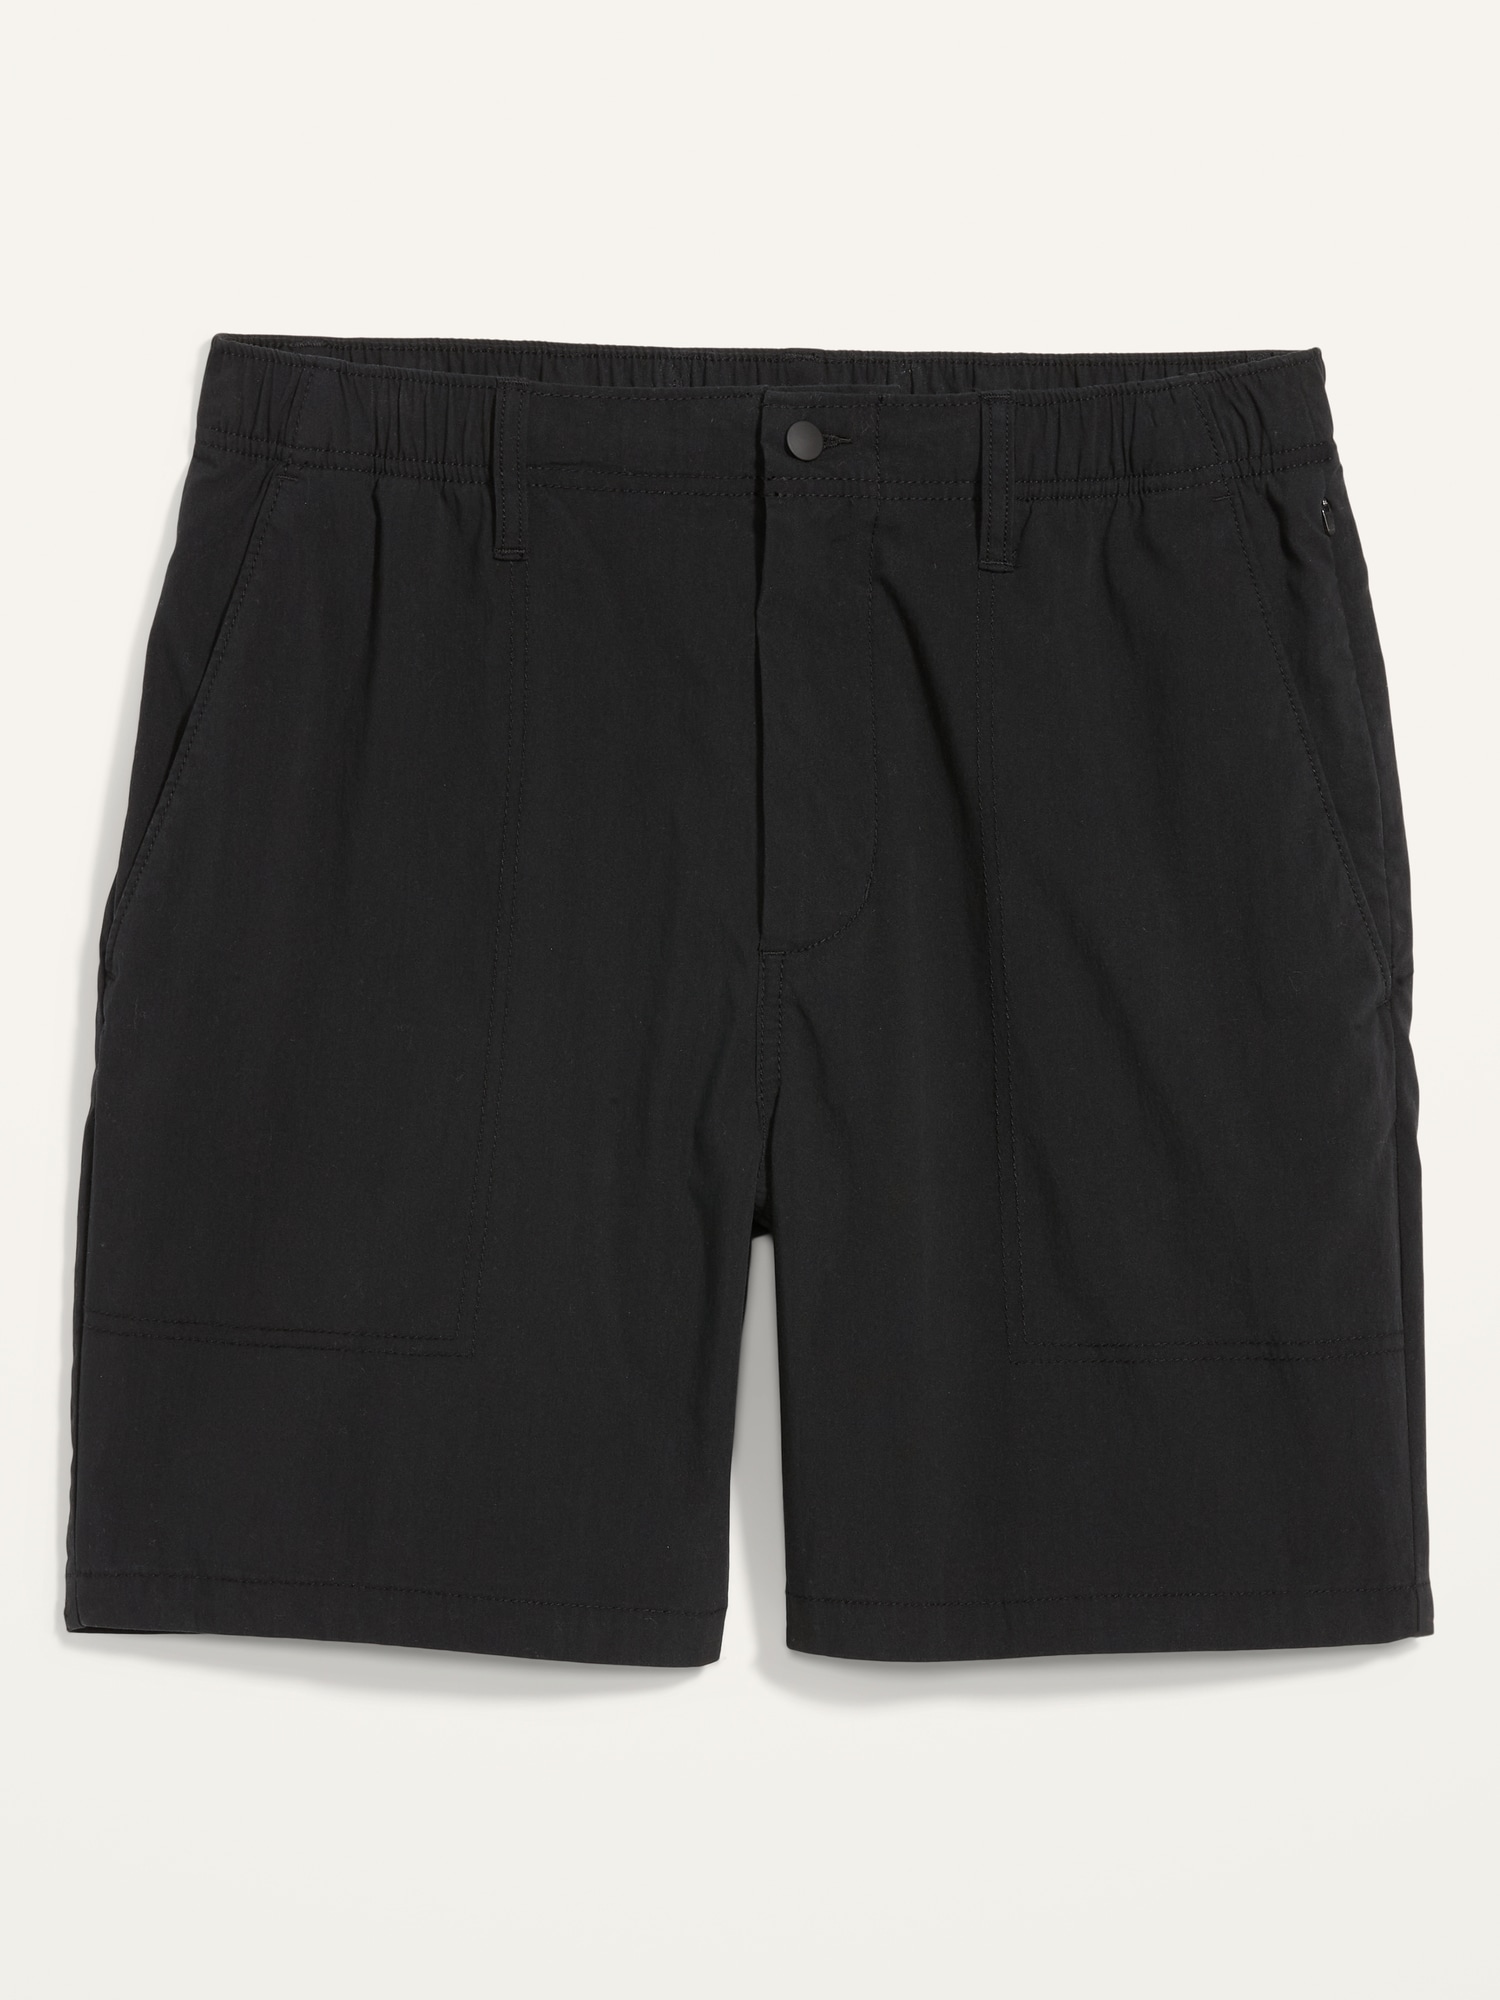 Hybrid Tech Chino Shorts for Men -- 7-inch inseam | Old Navy